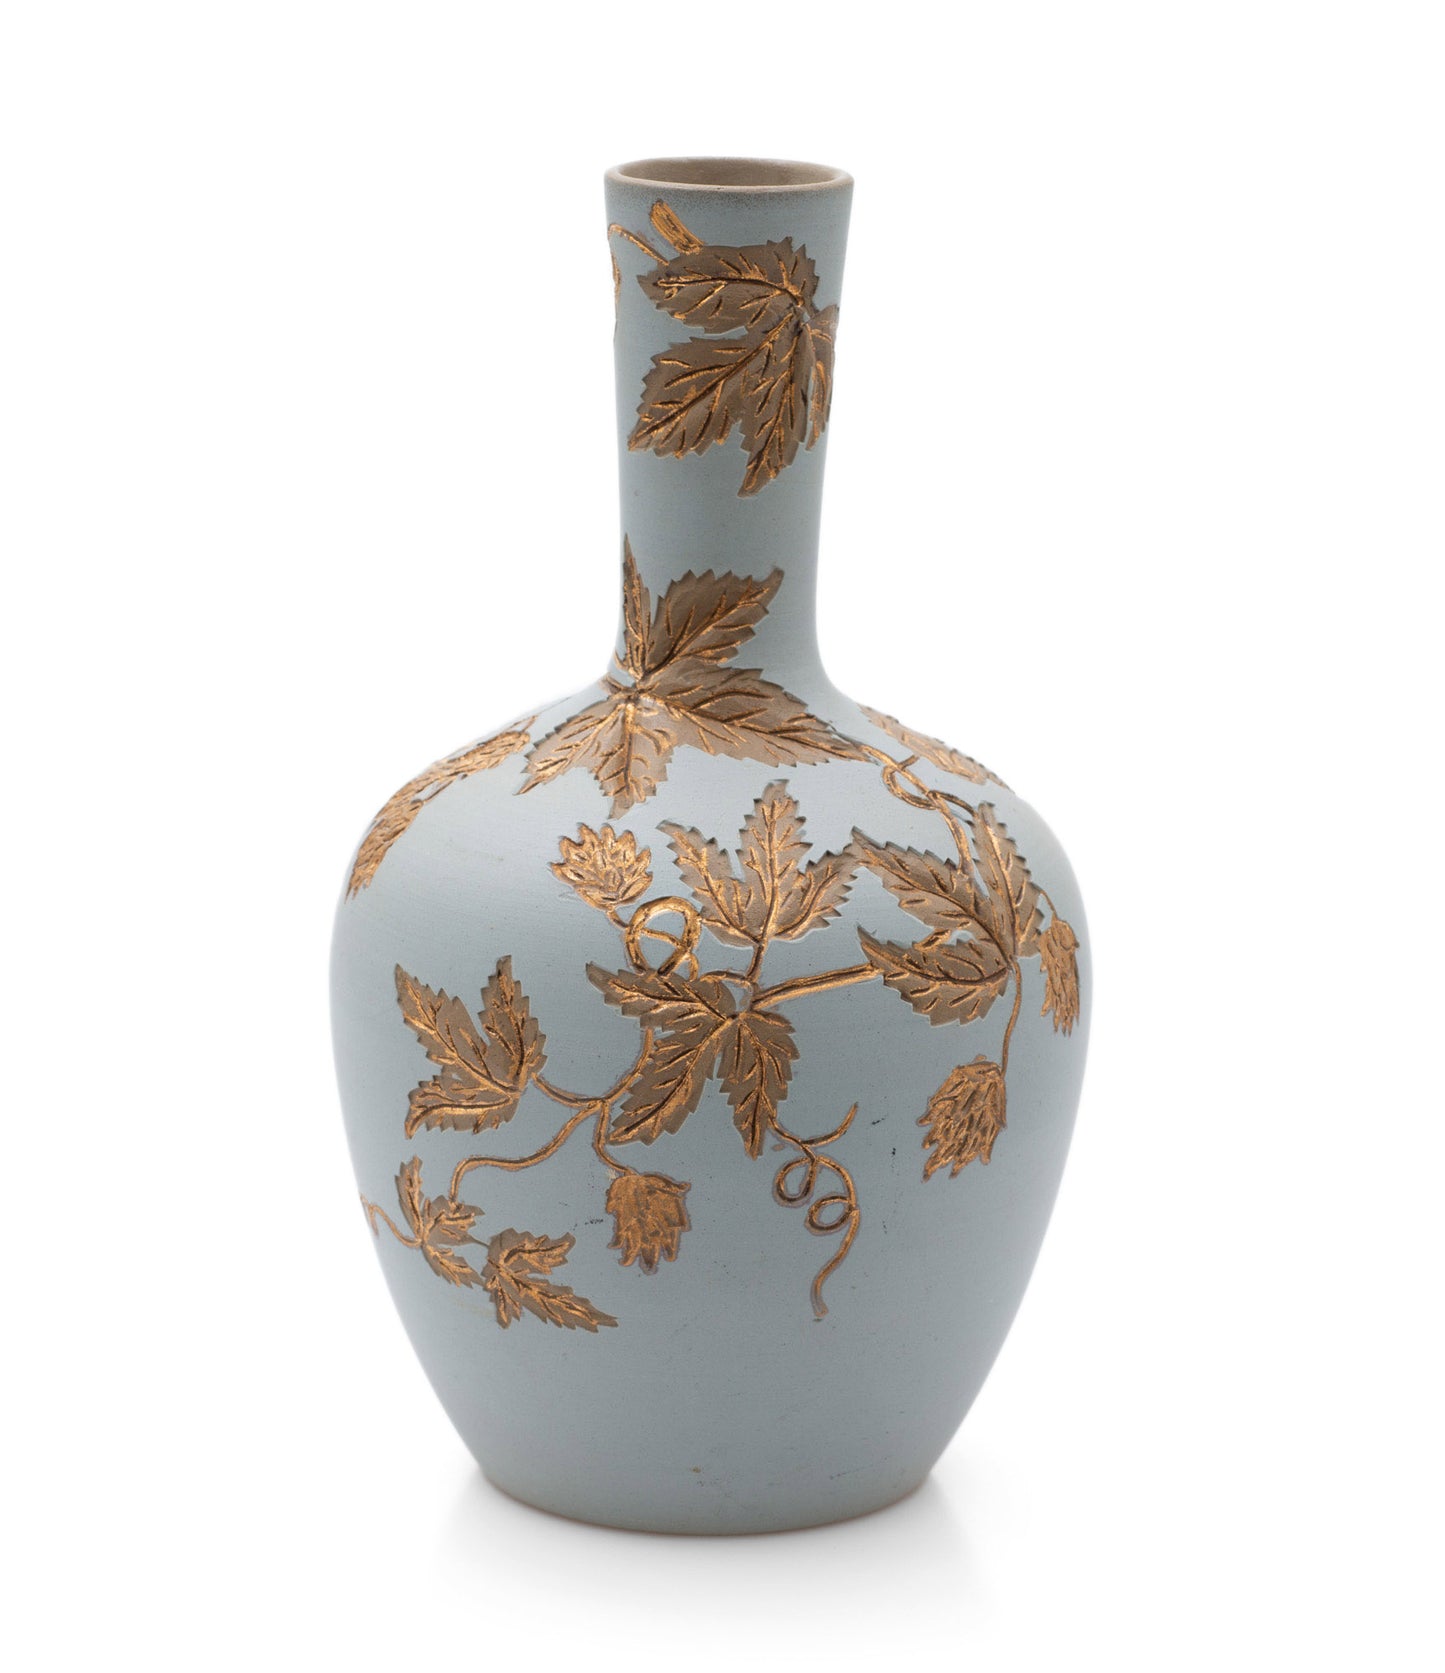 Antique Calvert & Lovatt Langley Ware Stoneware Sgraffito Vase in Duck Egg Blue (Code 2466)